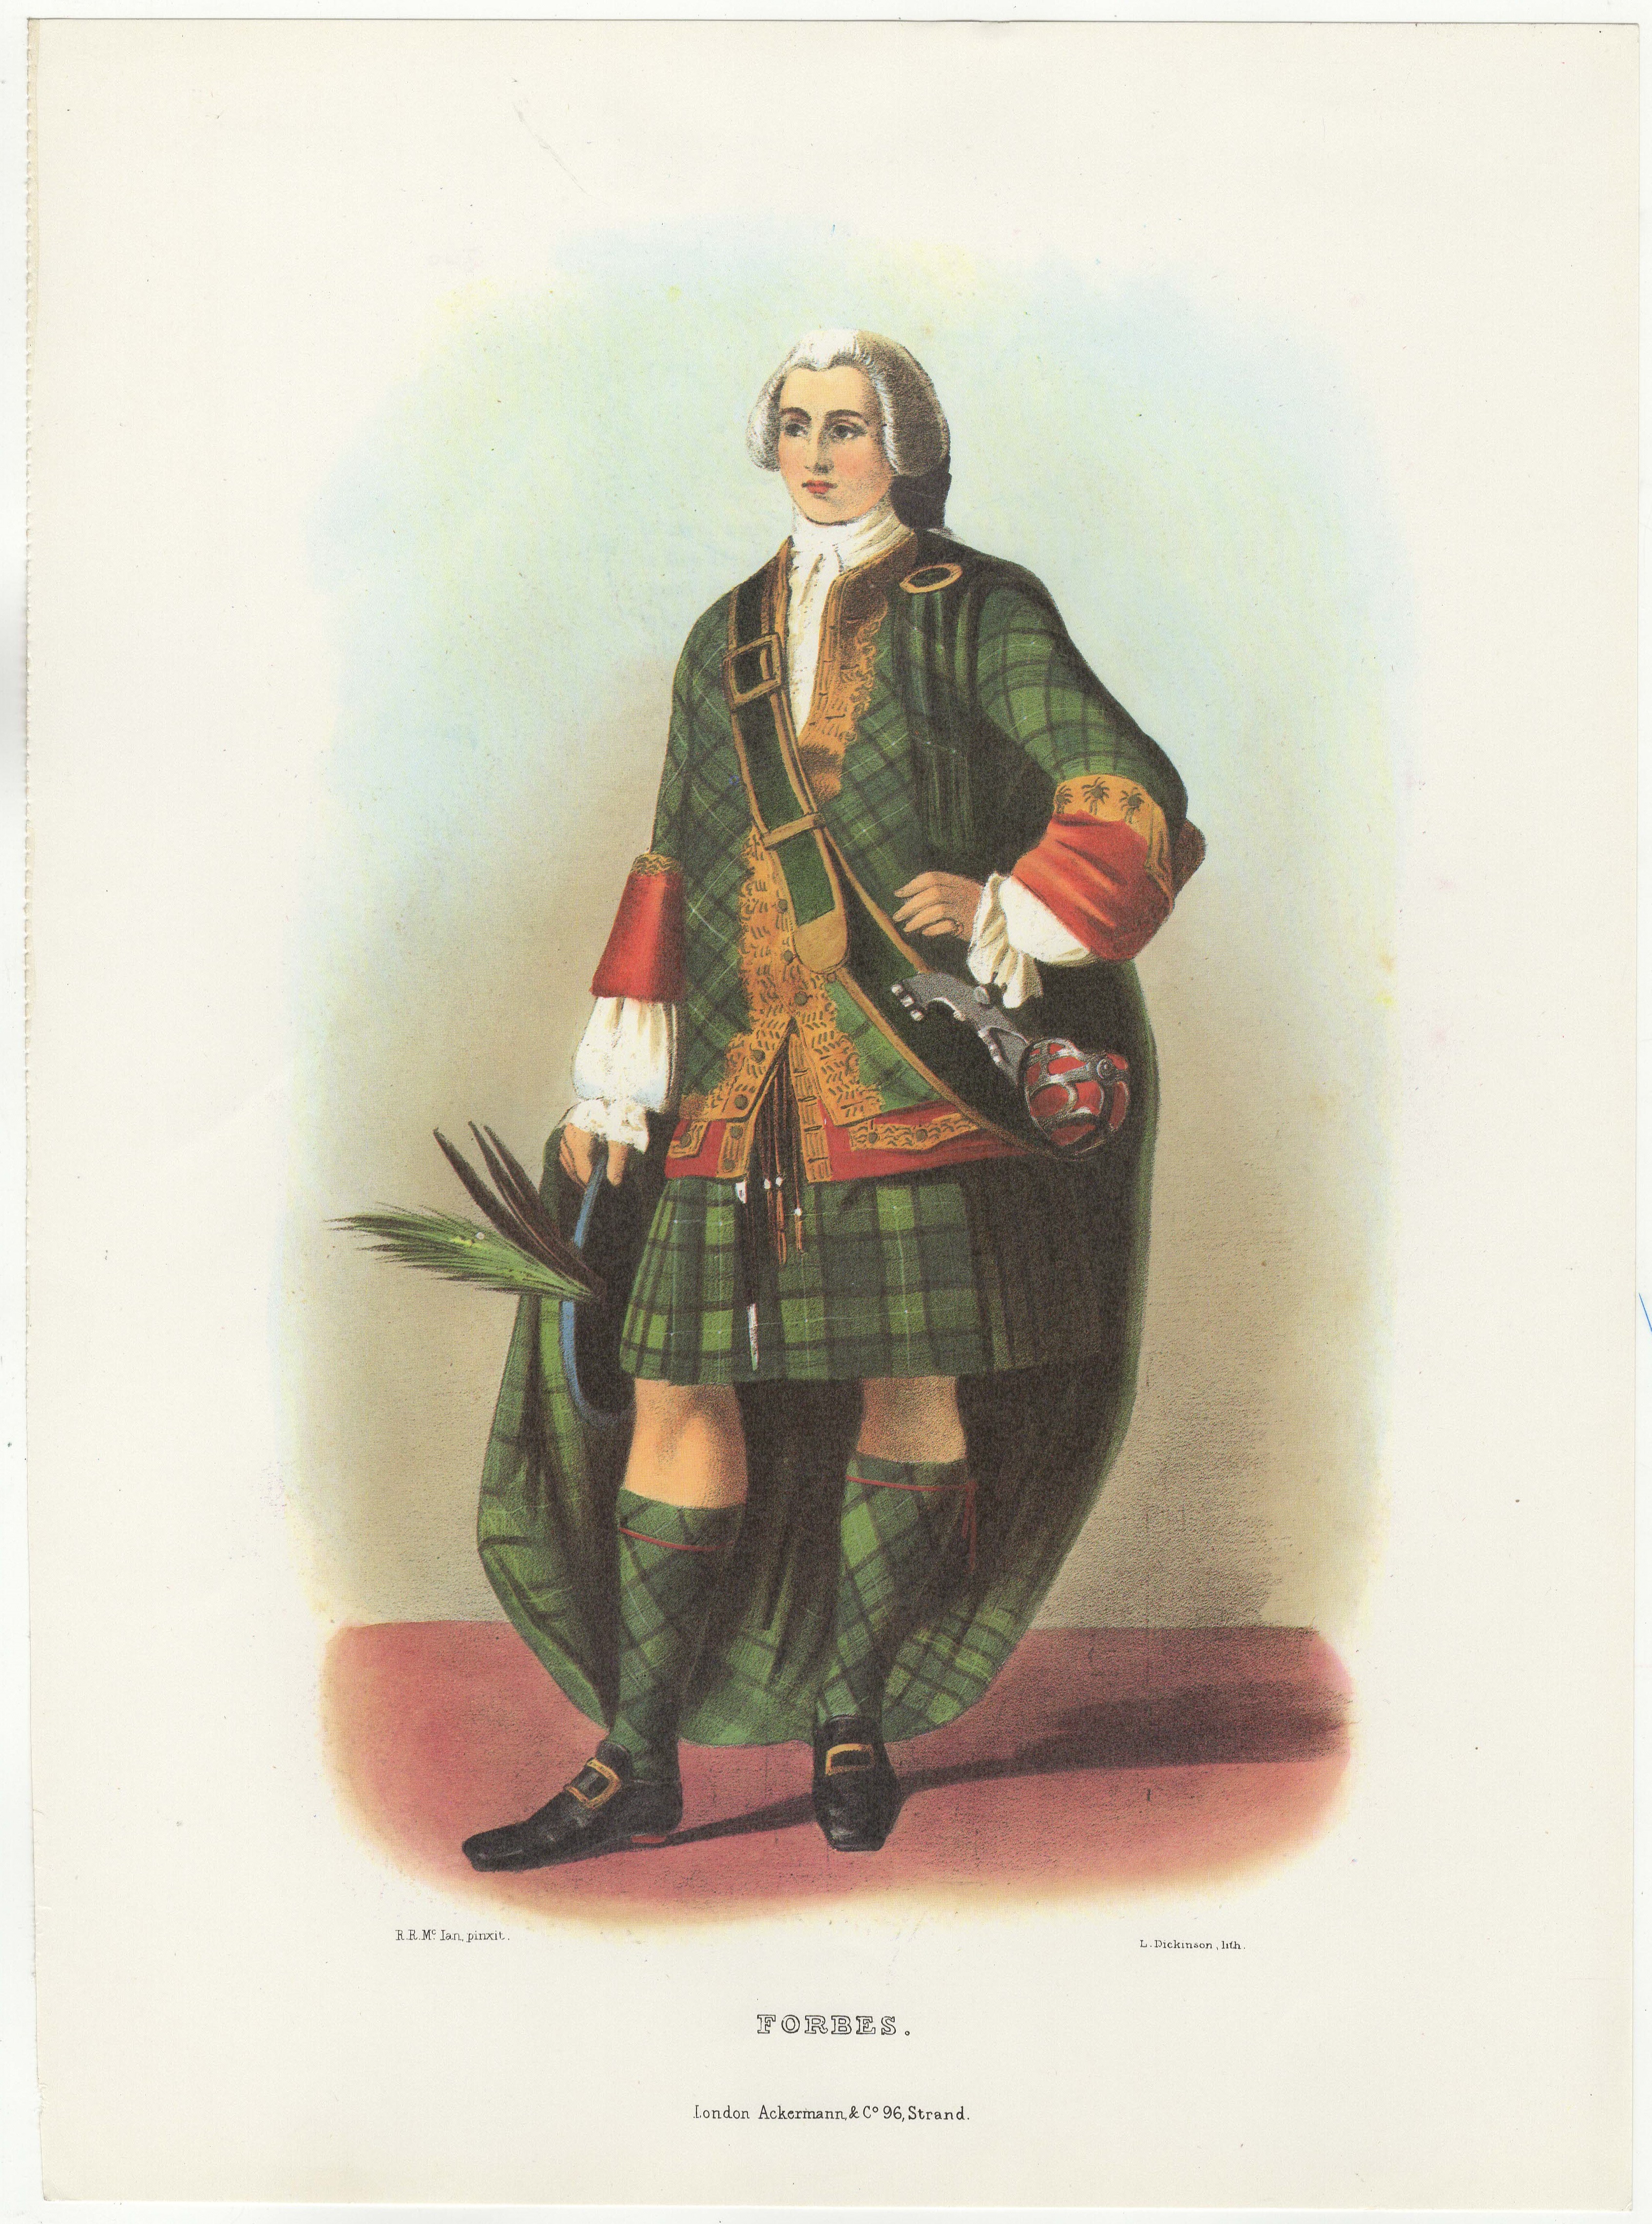 Ackerman Vintage Colour print 'Clan Forbes' R.R.McIan-printer L.Dickinson Lith 11" x 15"